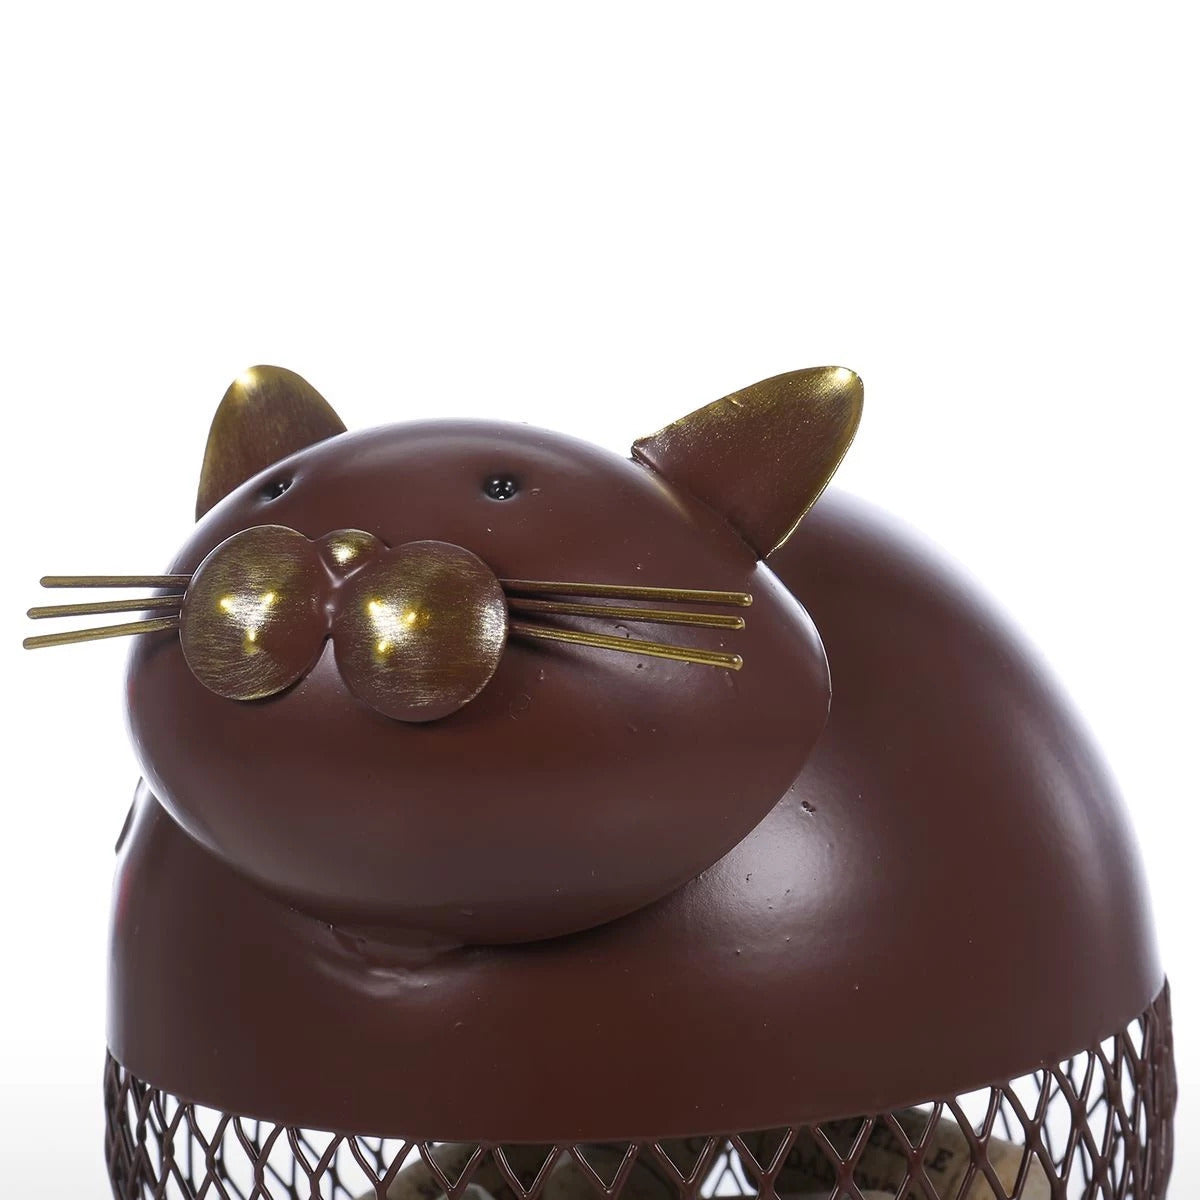 Decorative Jar with Cute Cat Figurine for Kitchen Countertop Decor